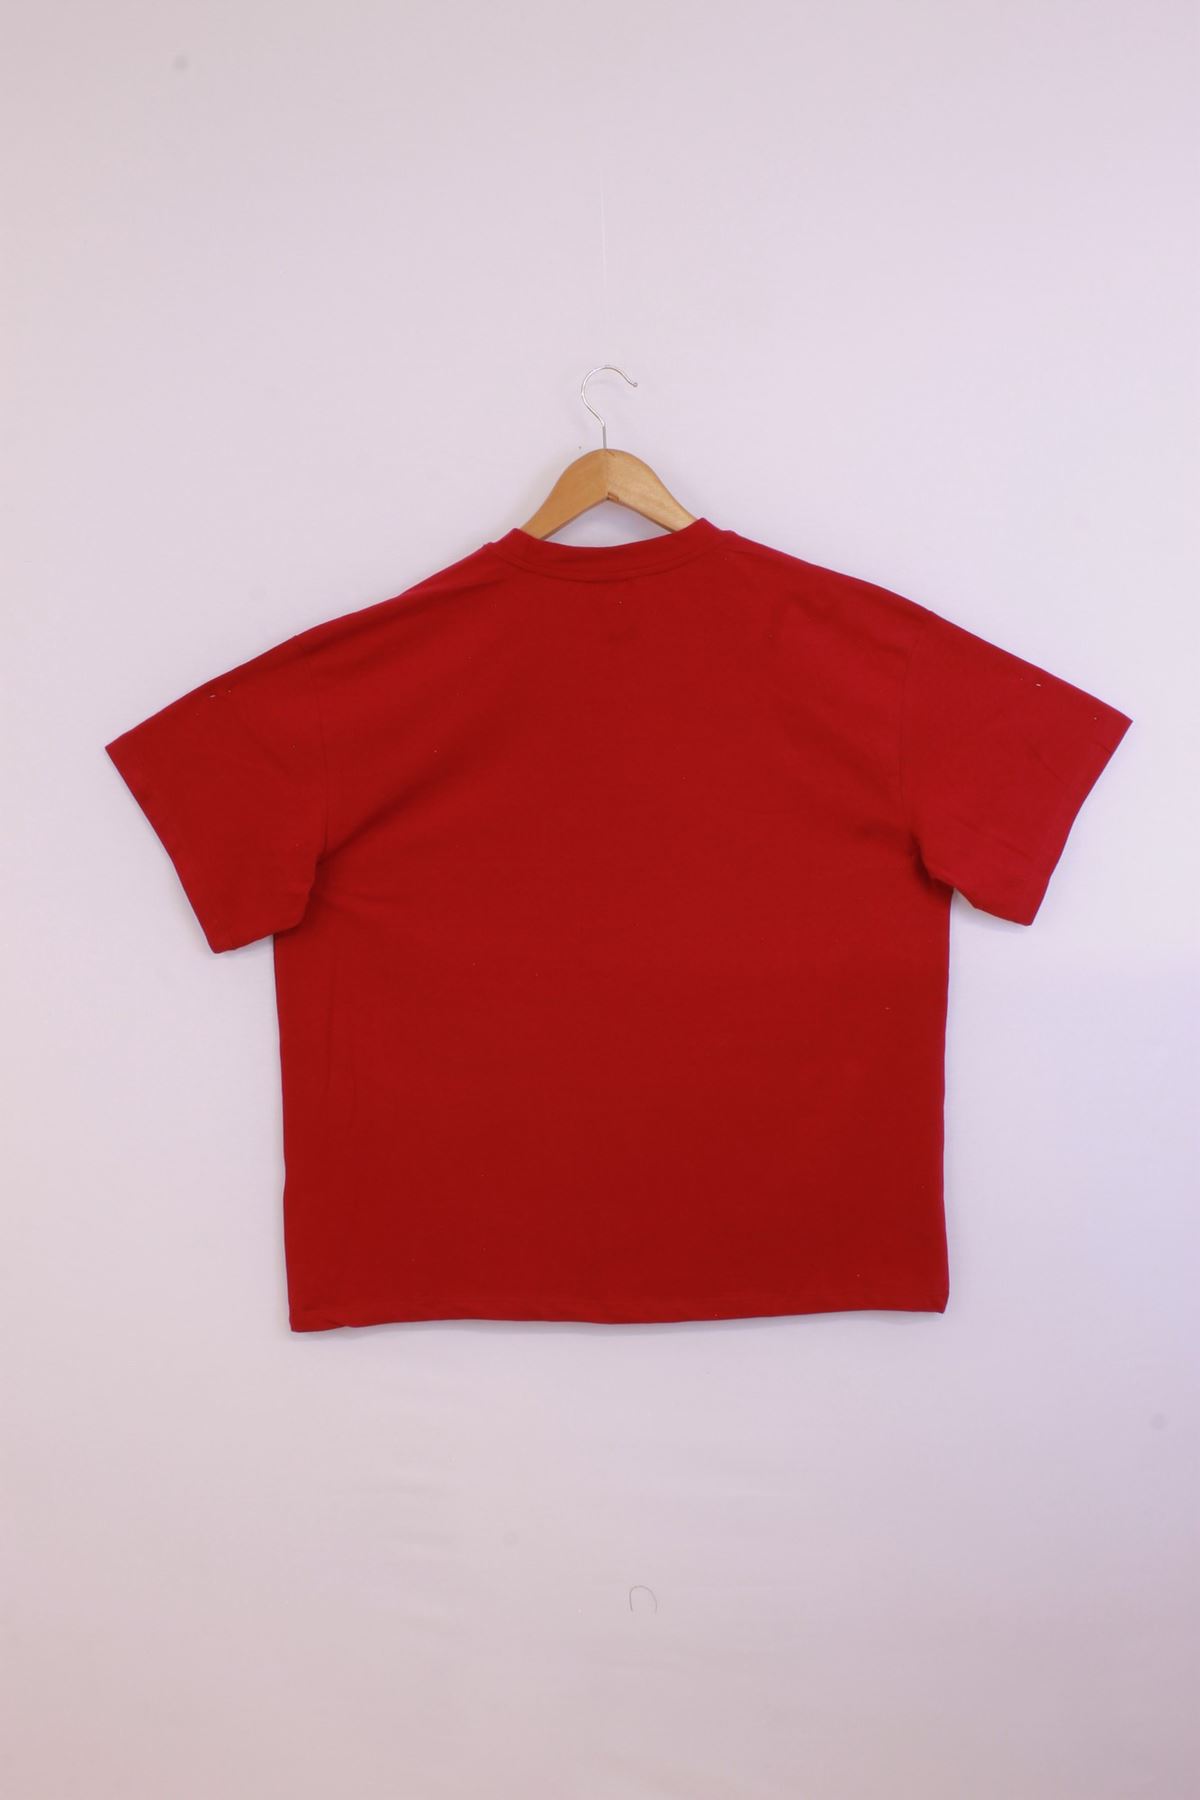 Giyinsen Kadın Kırmızı Tişört - 23YL71S95017